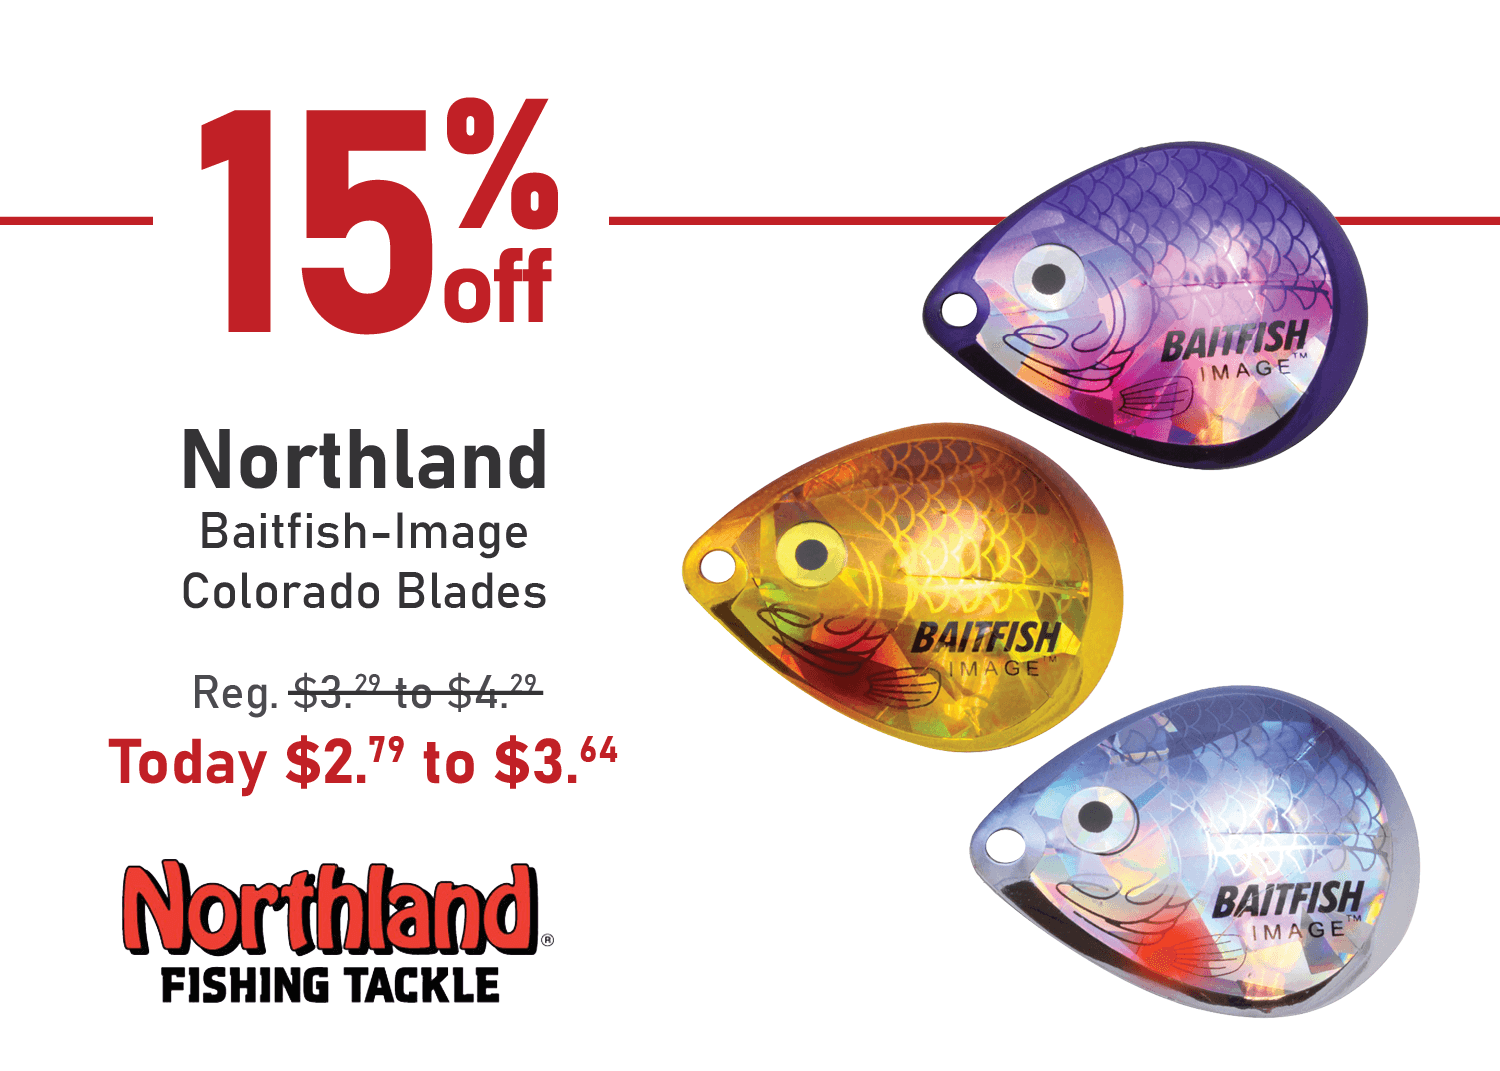 Save 15% on Northland Baitfish-Image Colorado Blades!